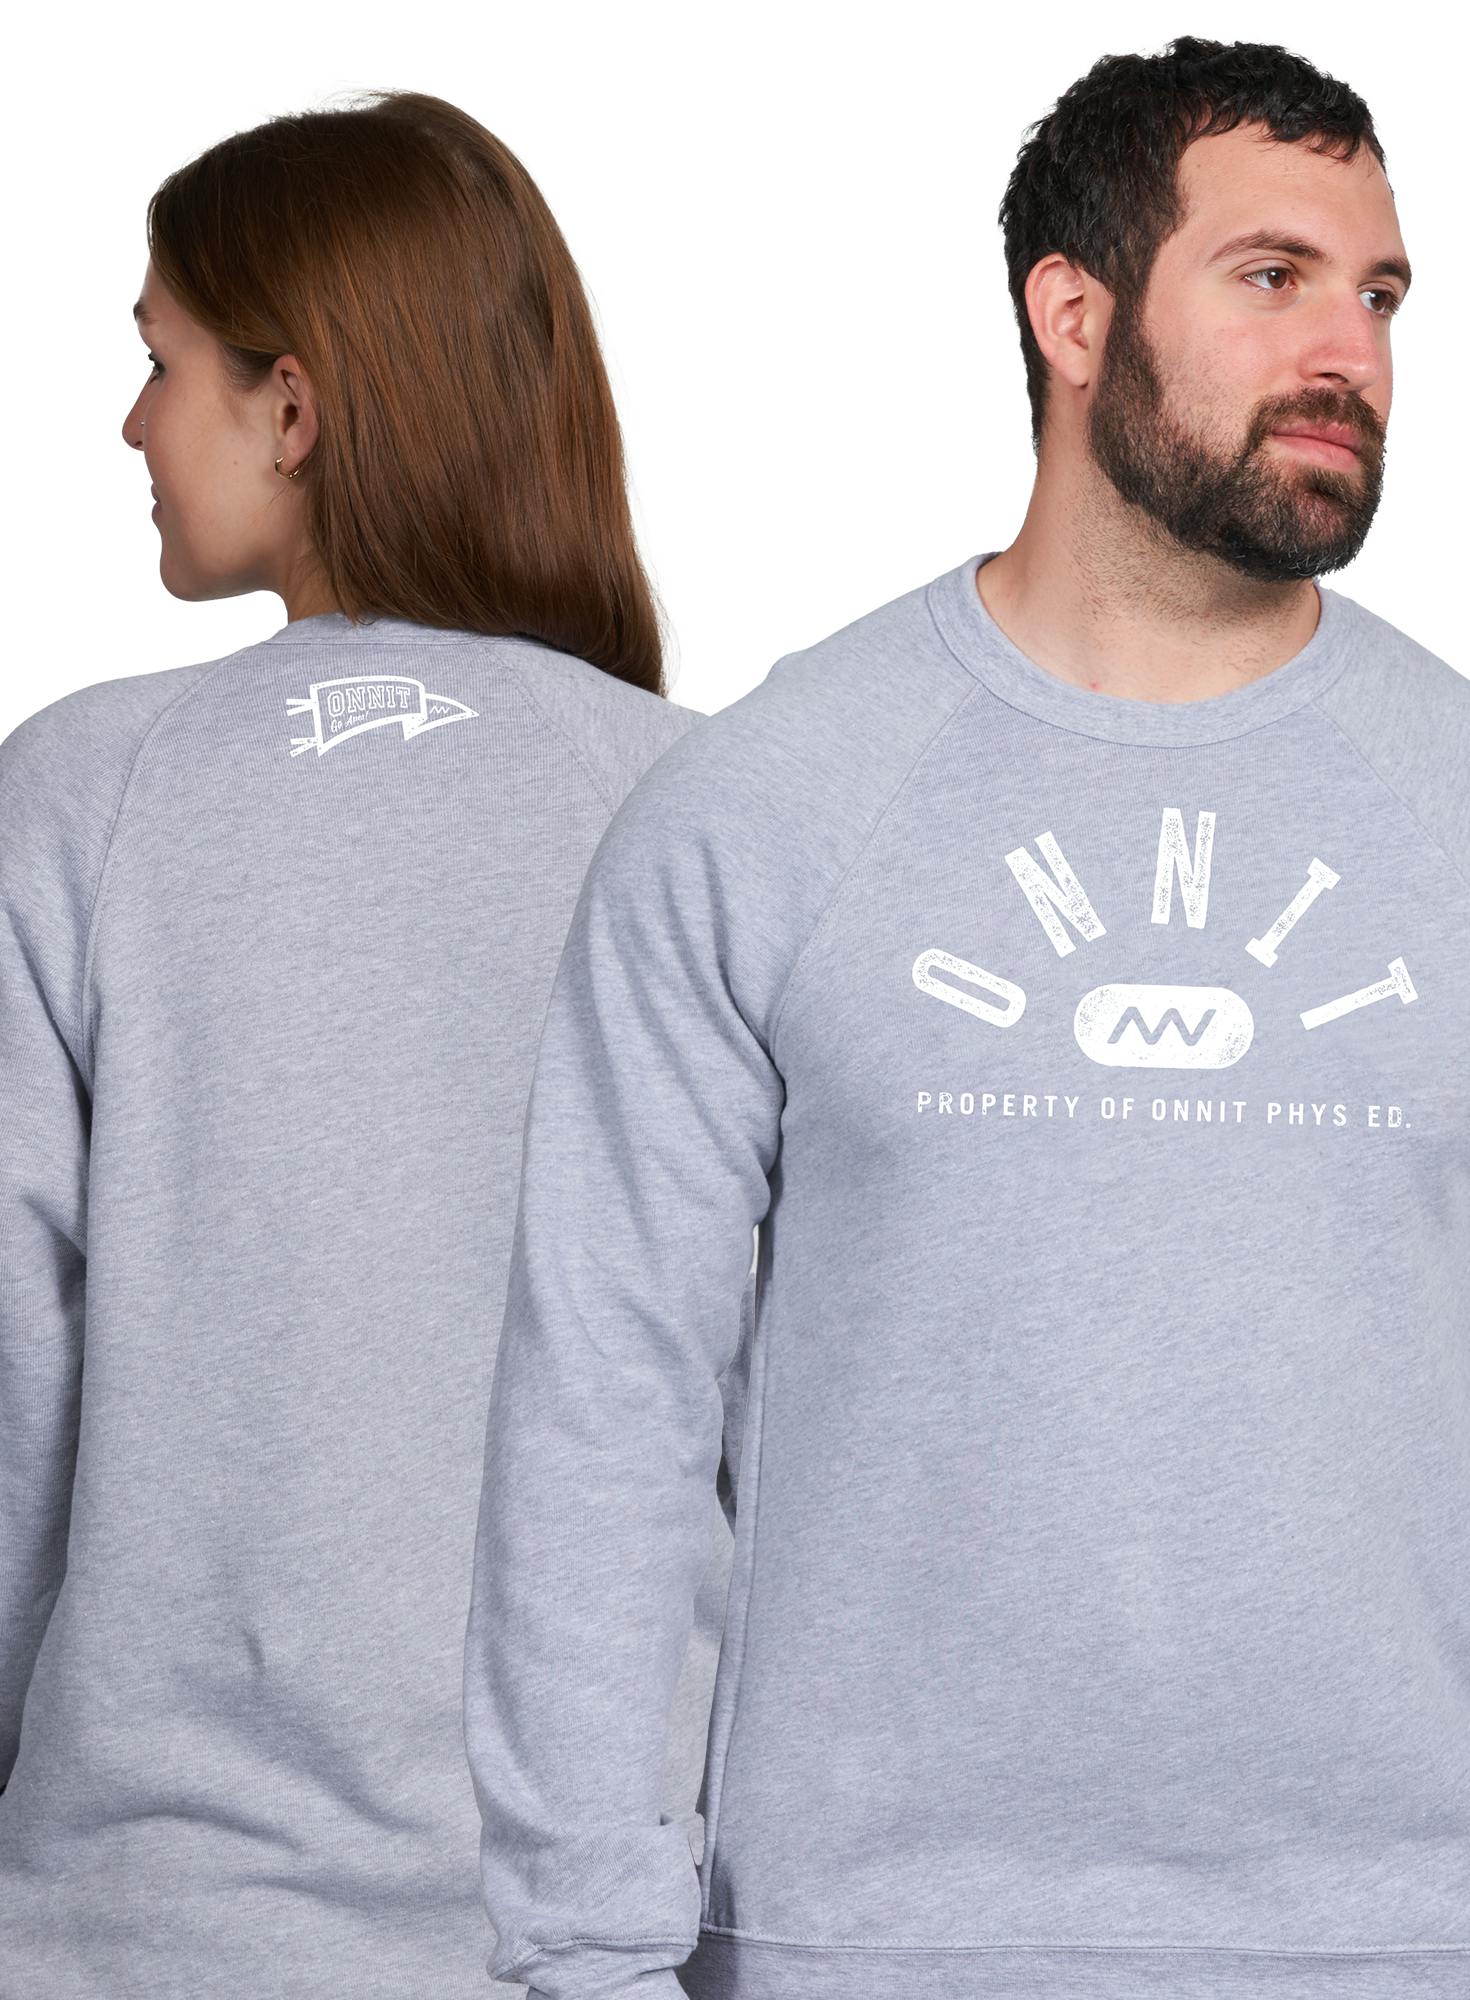 Onnit Phys Ed Crewneck Sweatshirt